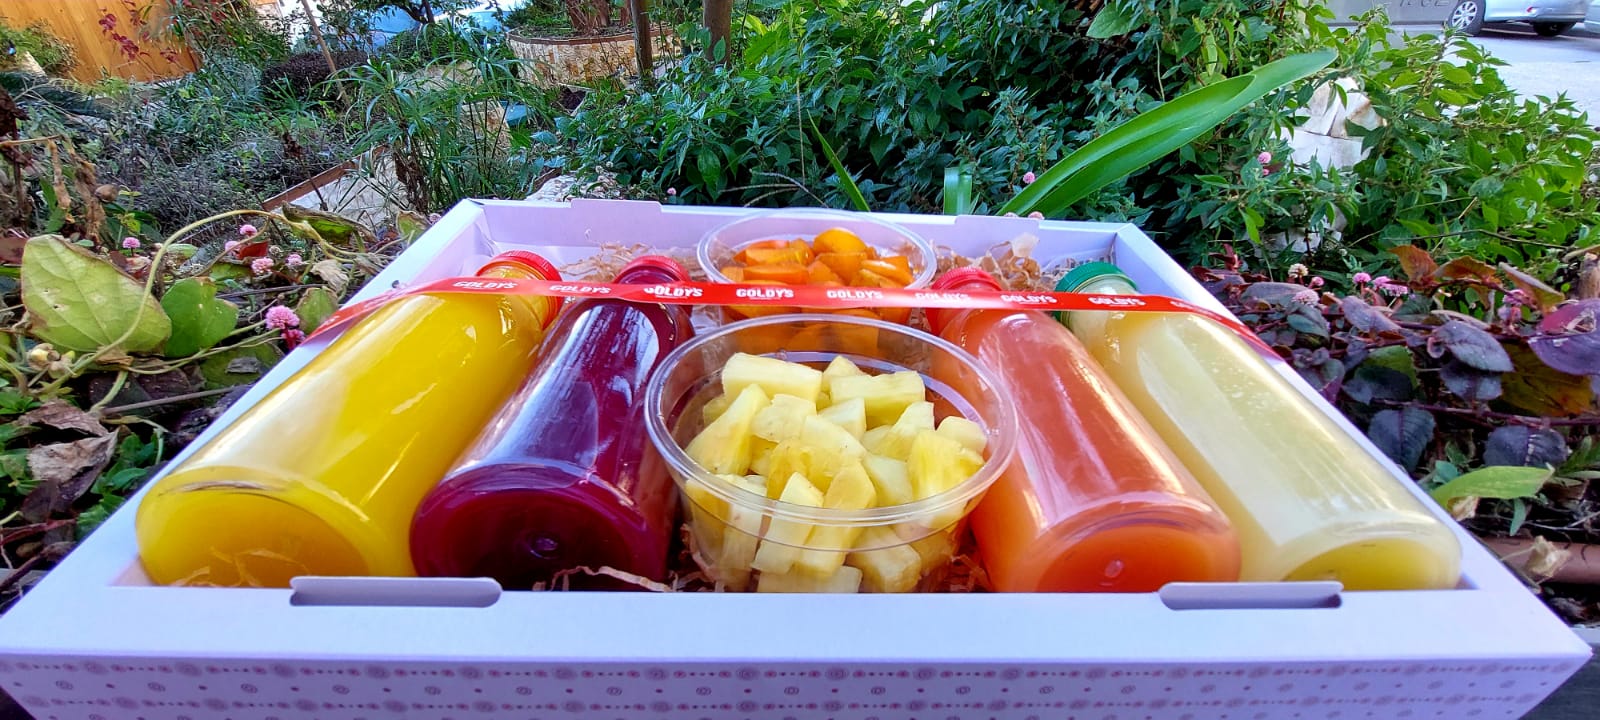 Juices & Fruits Purim Basket 